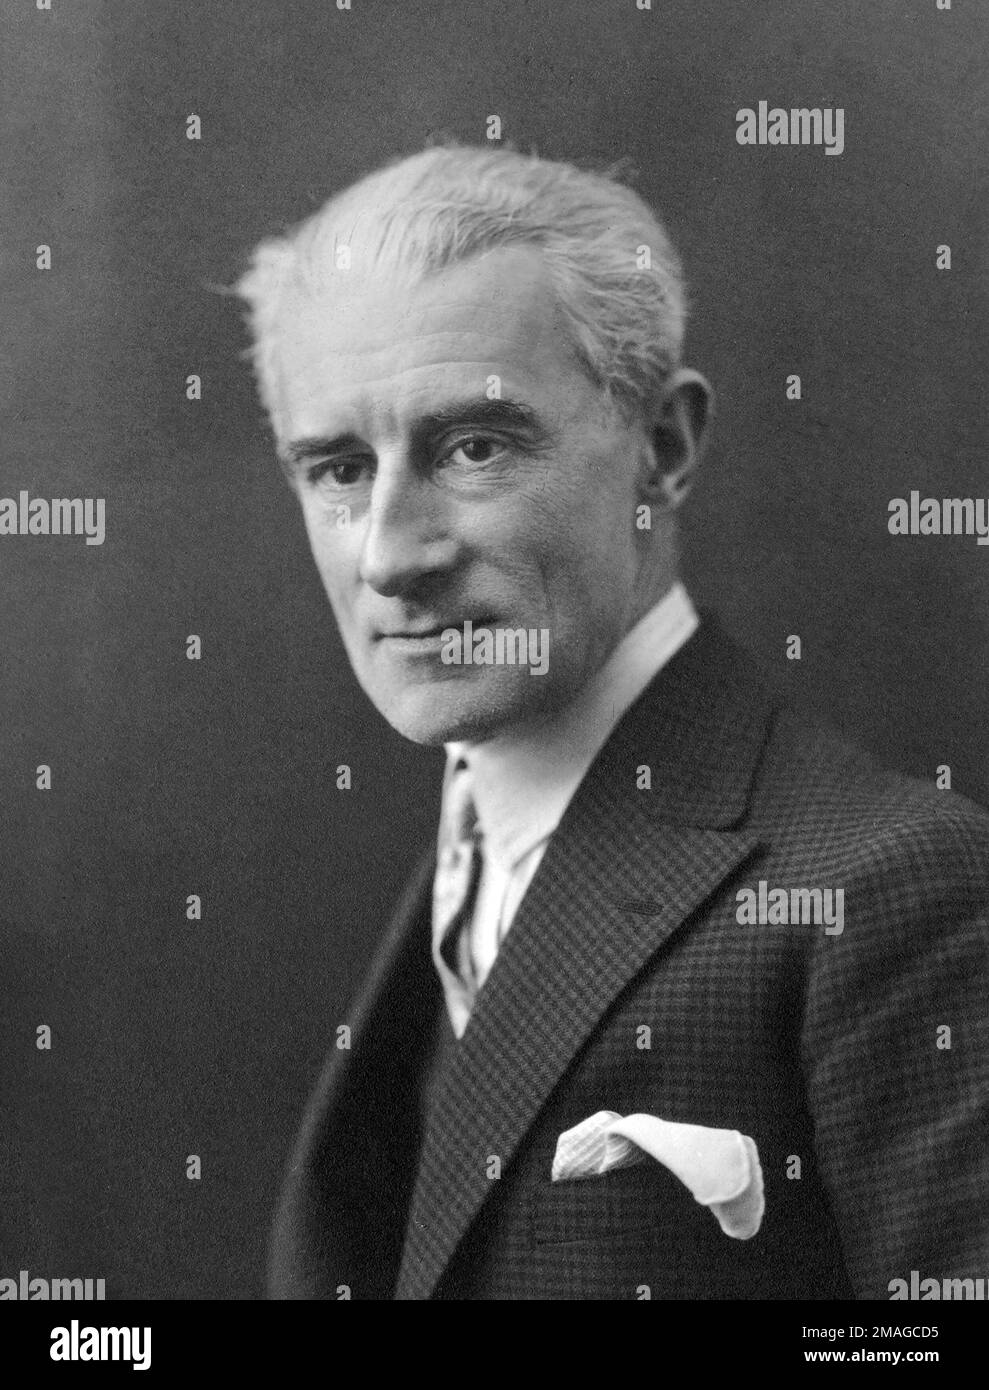 Ravel. Portrait of the French composer, Joseph Maurice Ravel (1875-1937), 1925 Stock Photo